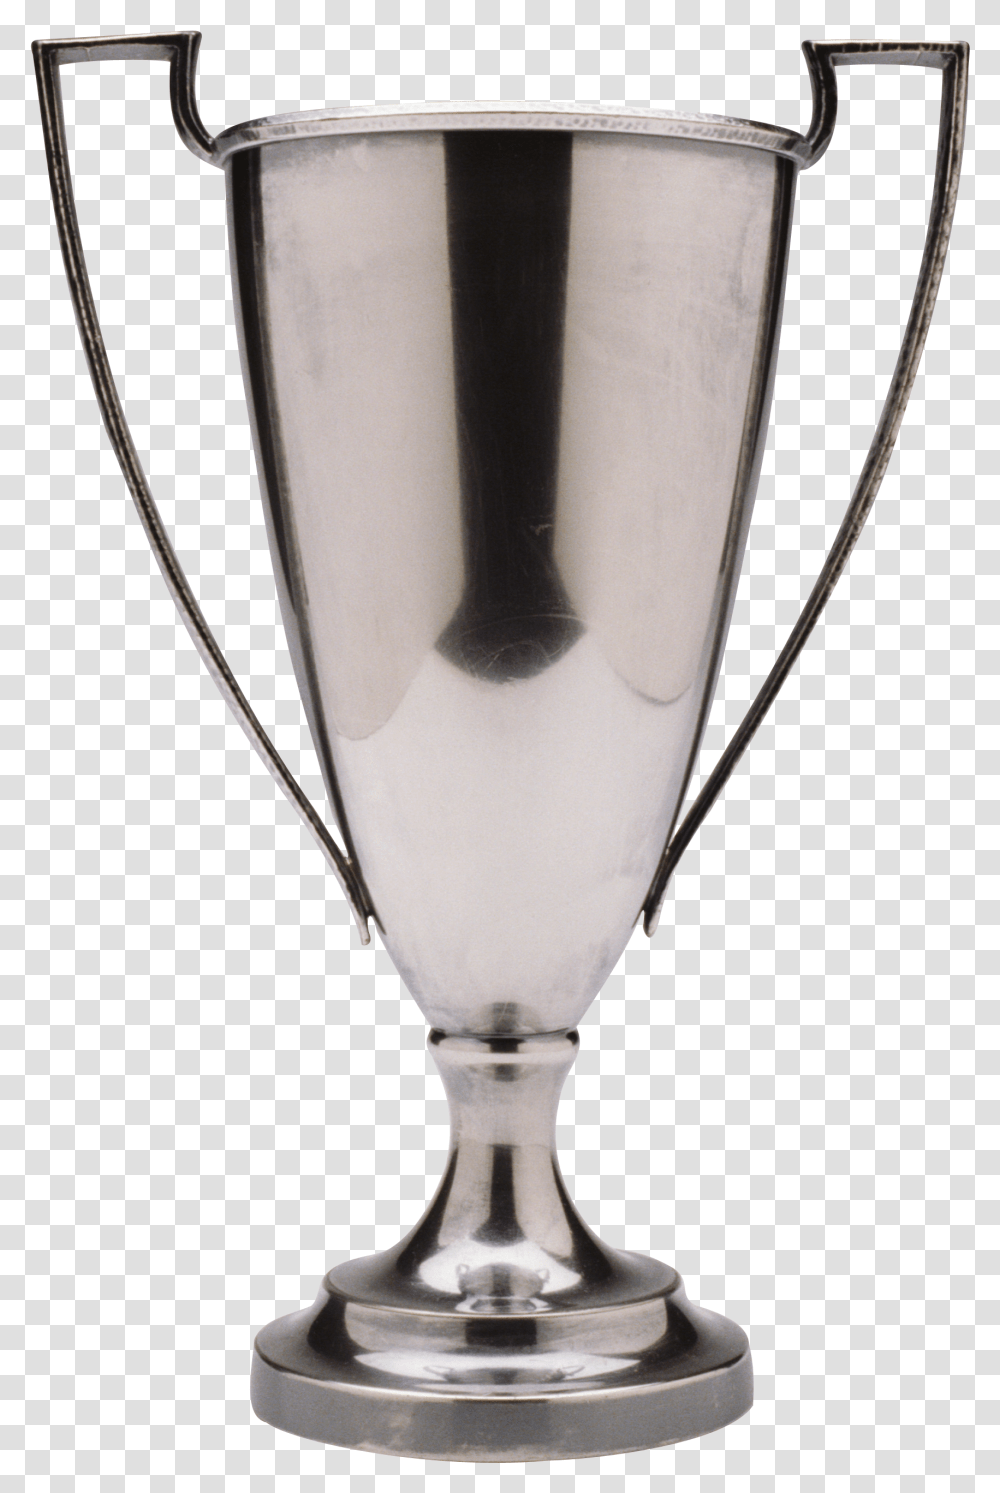 Download Trophy Foundation Cup Wikimedia Wikipedia Commons Silhueta Das De Futebol, Lamp Transparent Png